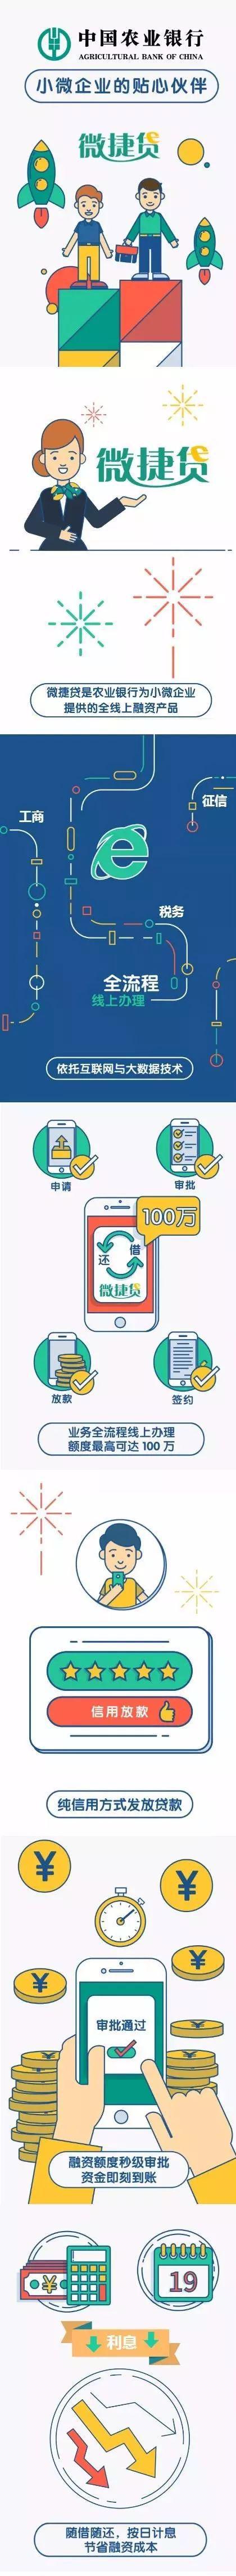 bat365中文官方网站@创业青年科左后旗政策和金融产品汇总在这里(图1)